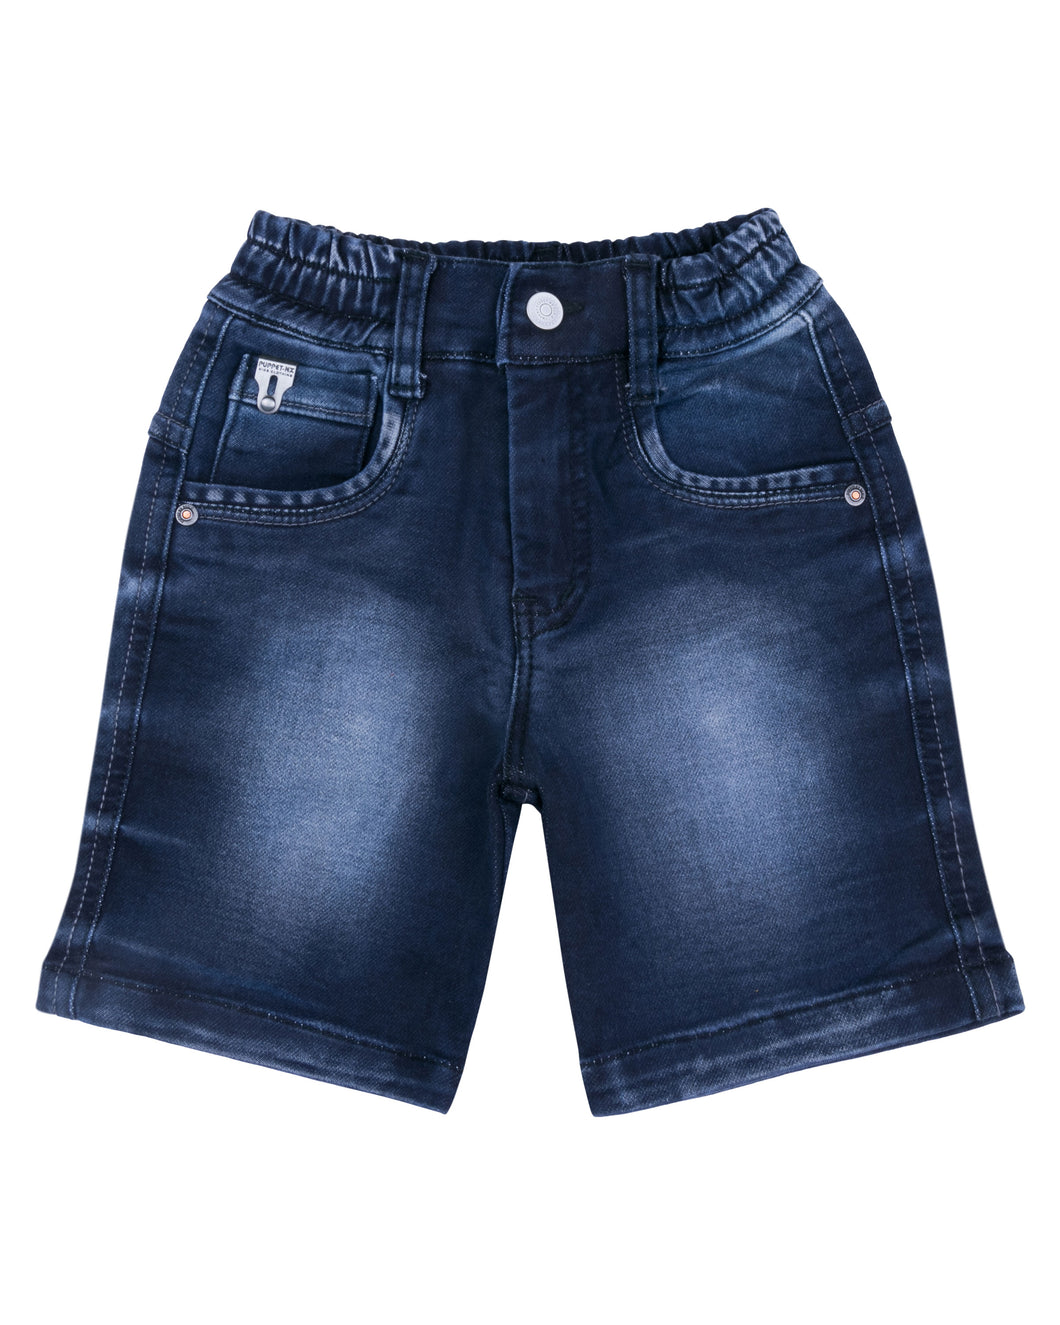 Boys Fashion Blue Washed Denim Shorts